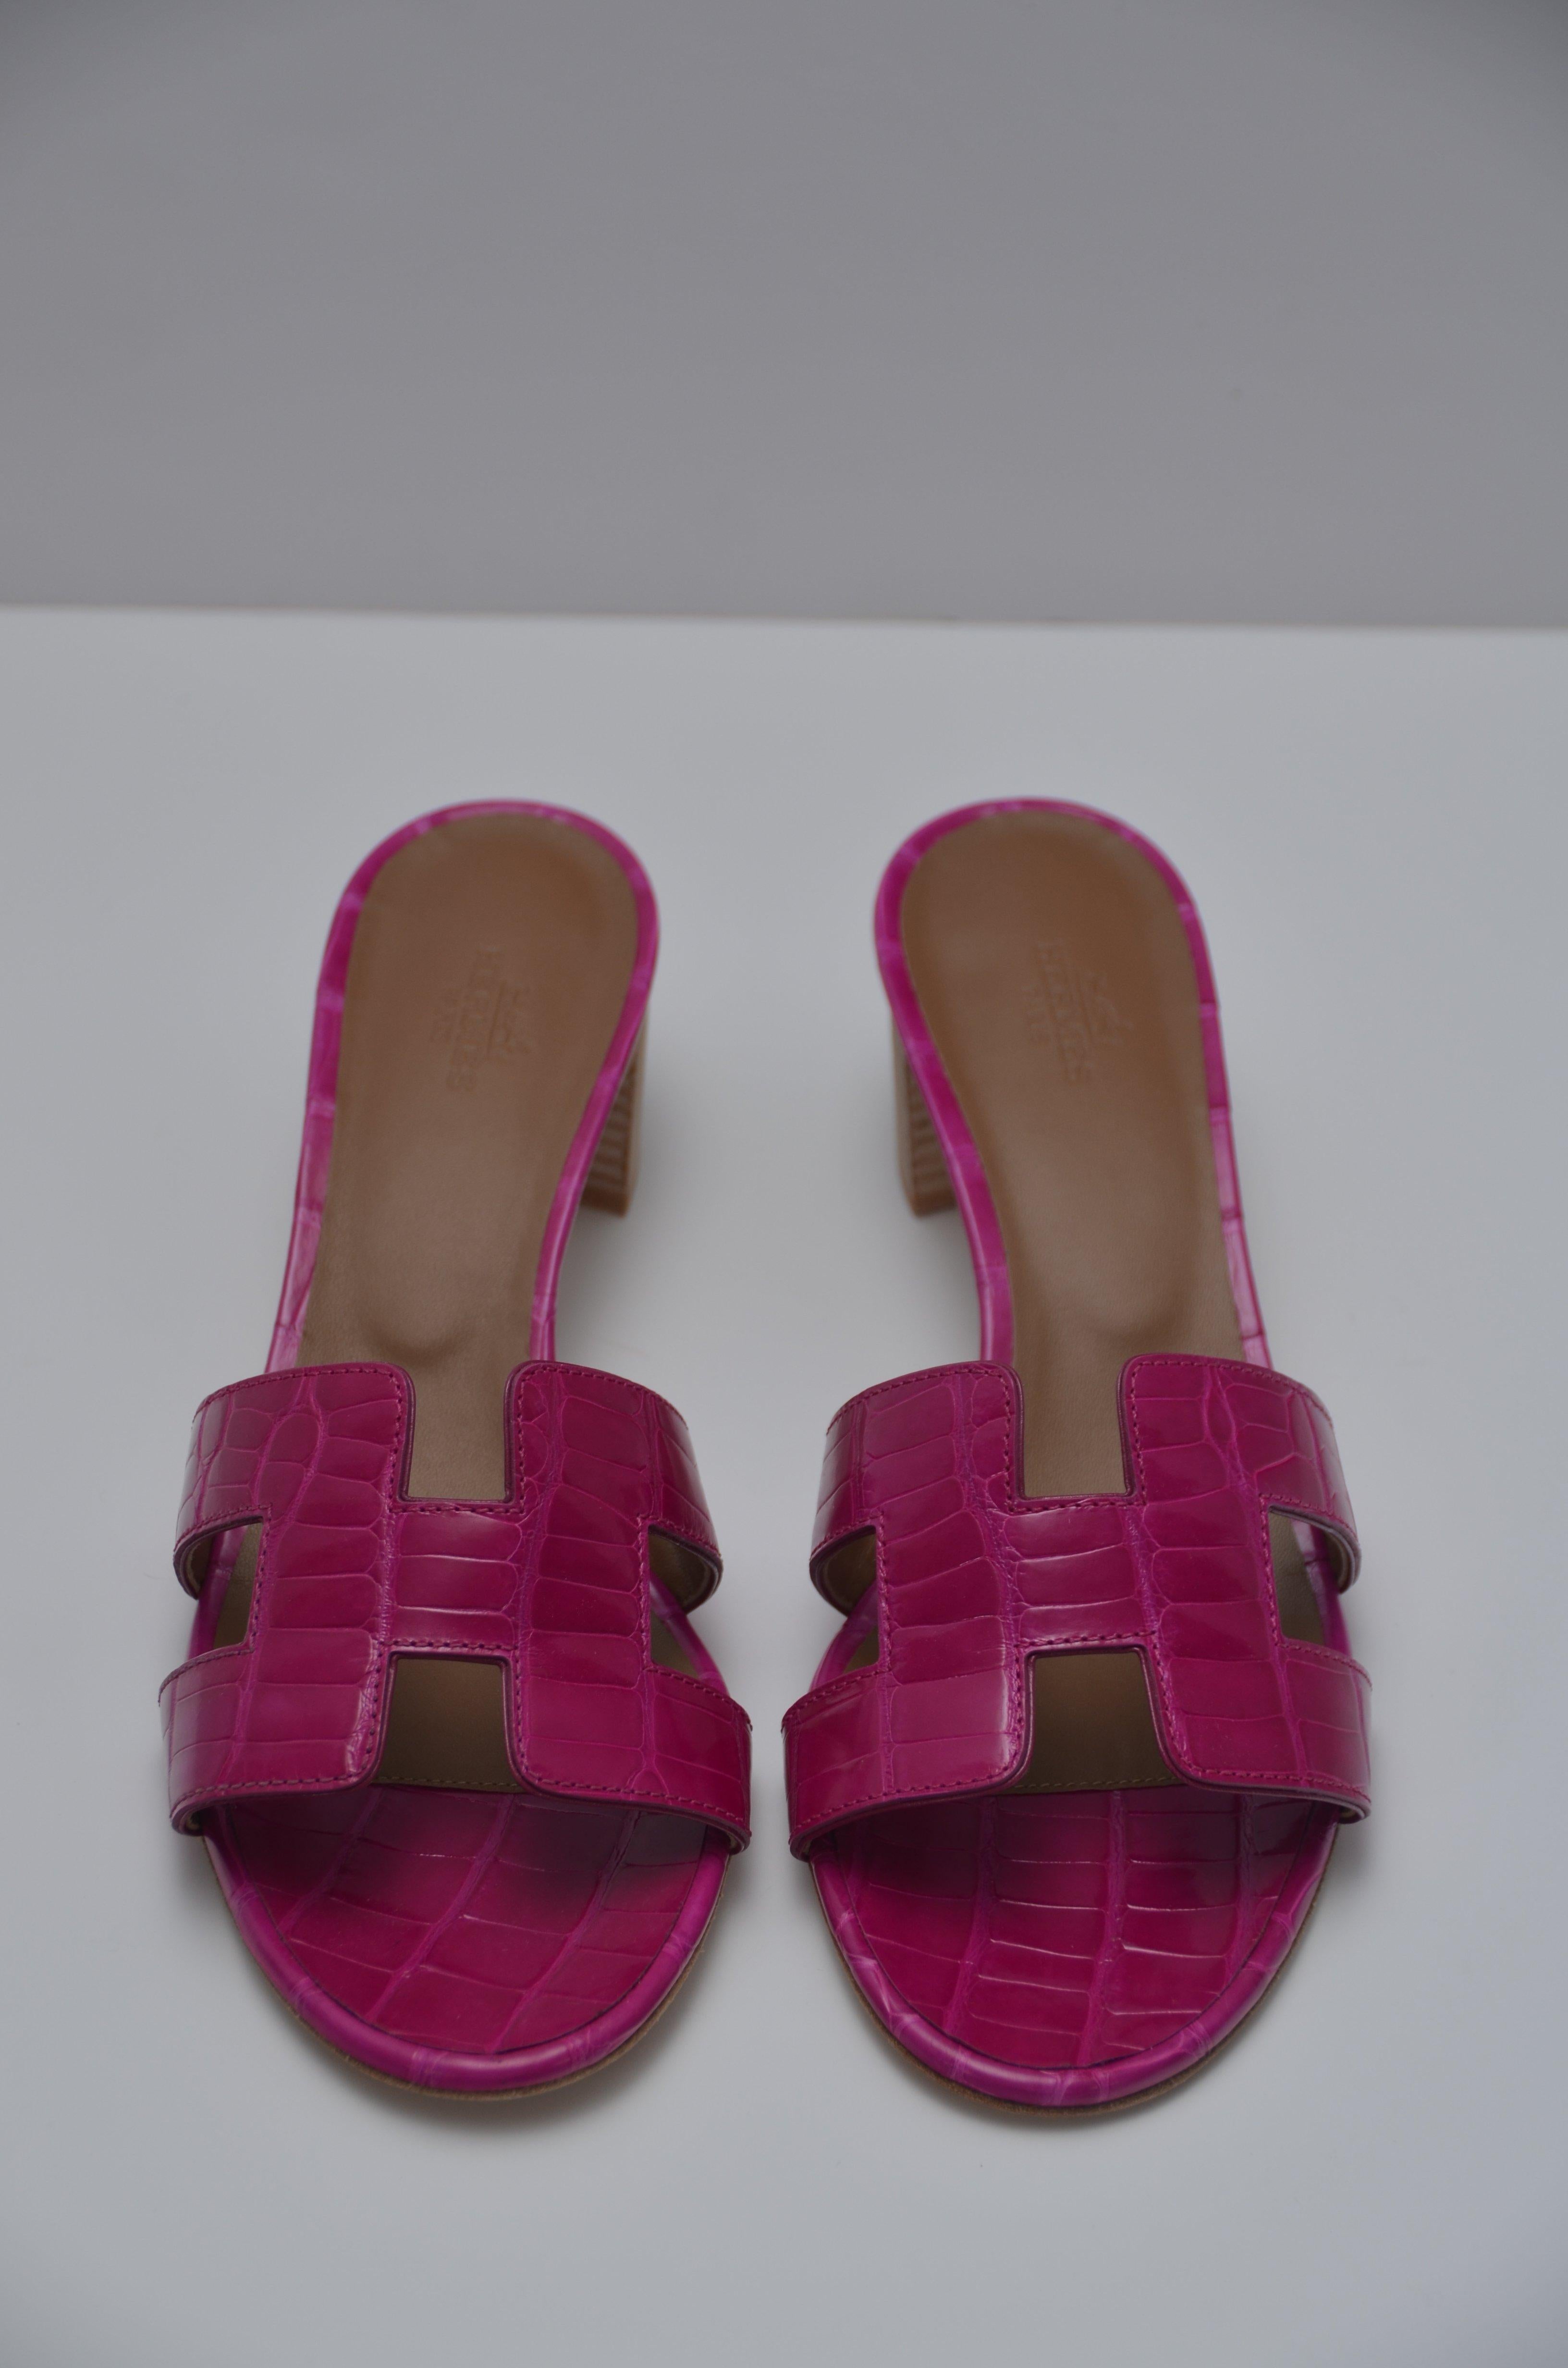 HERMES Sandales Chaussures Shiny  Rose Sheherazade Couleur Crocodile NOUVEAU  Neuf - En vente à New York, NY